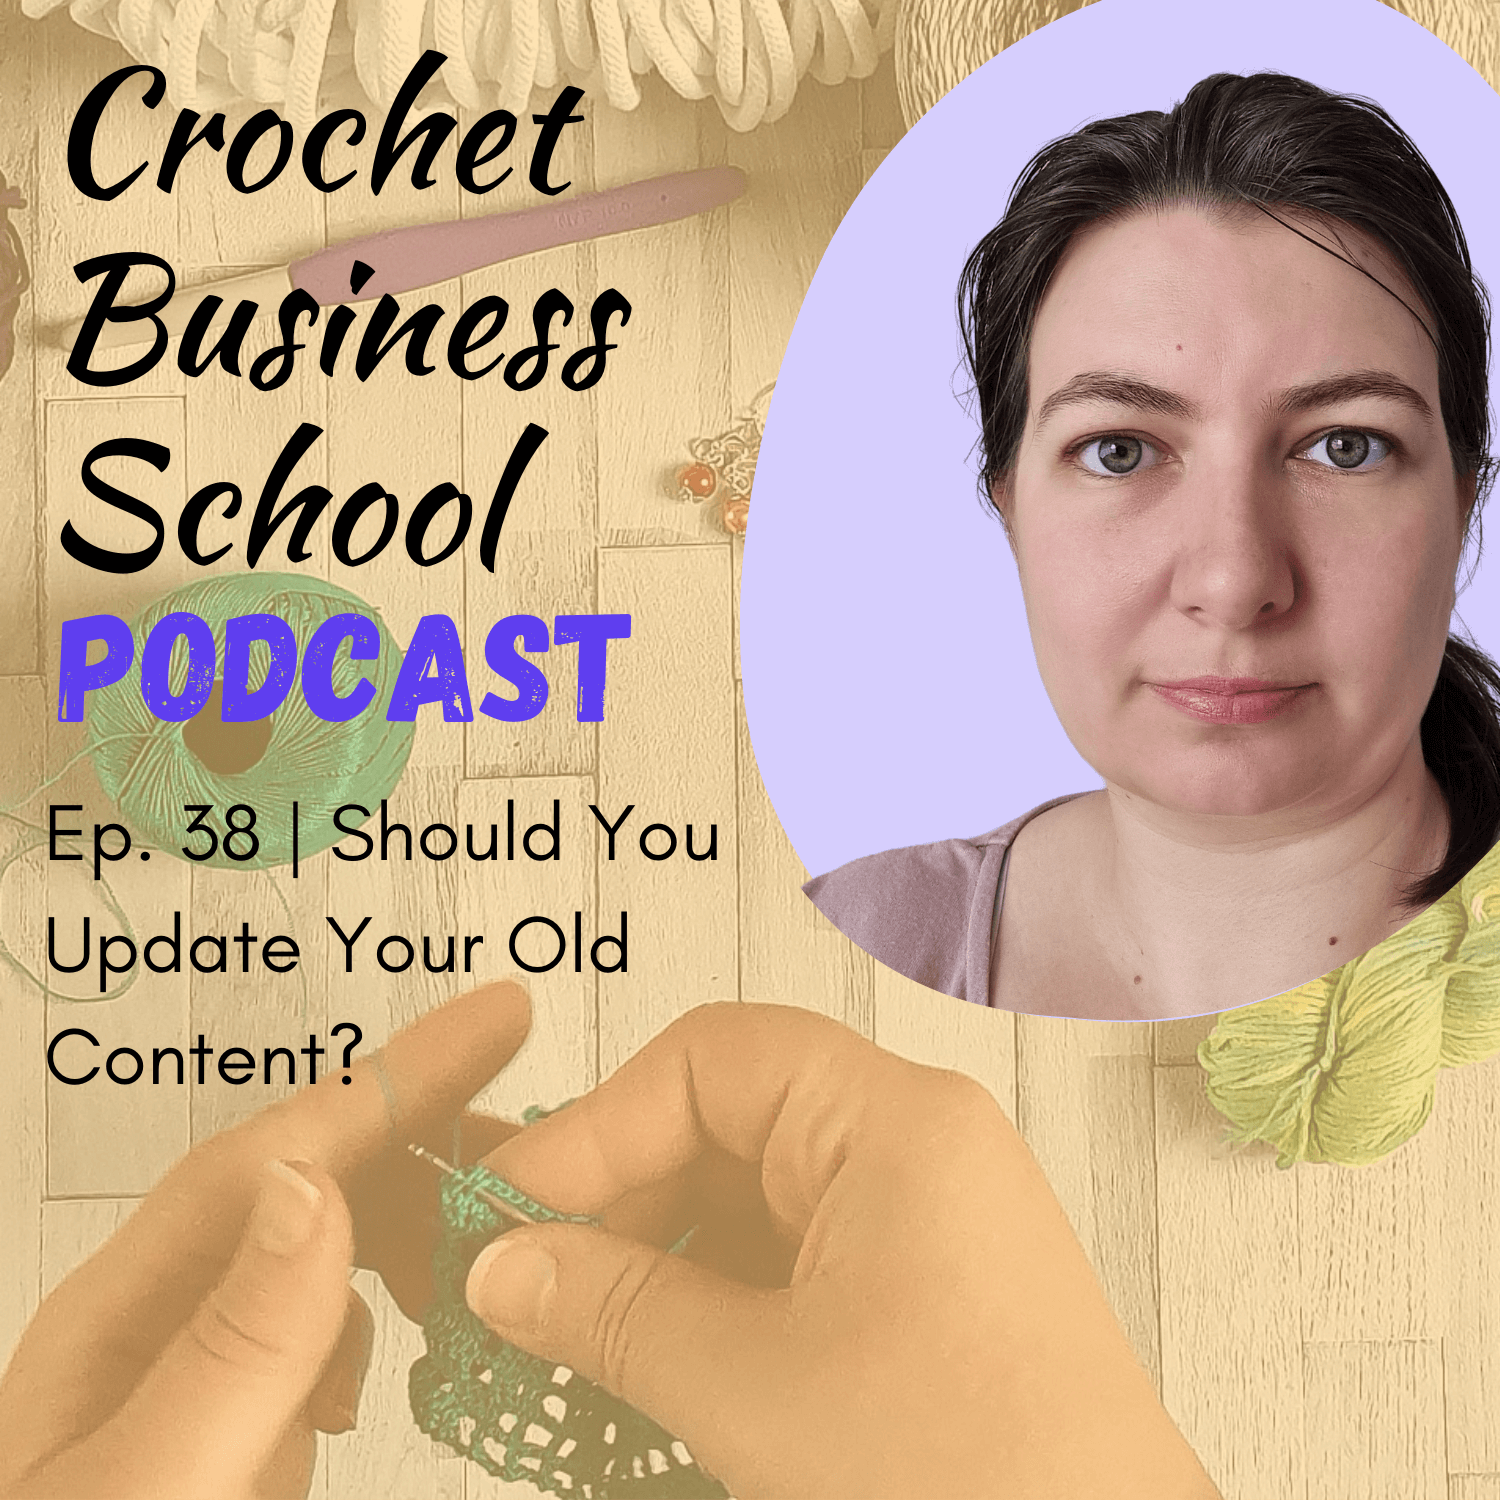 Artwork for podcast The Crochet Business School Podcast